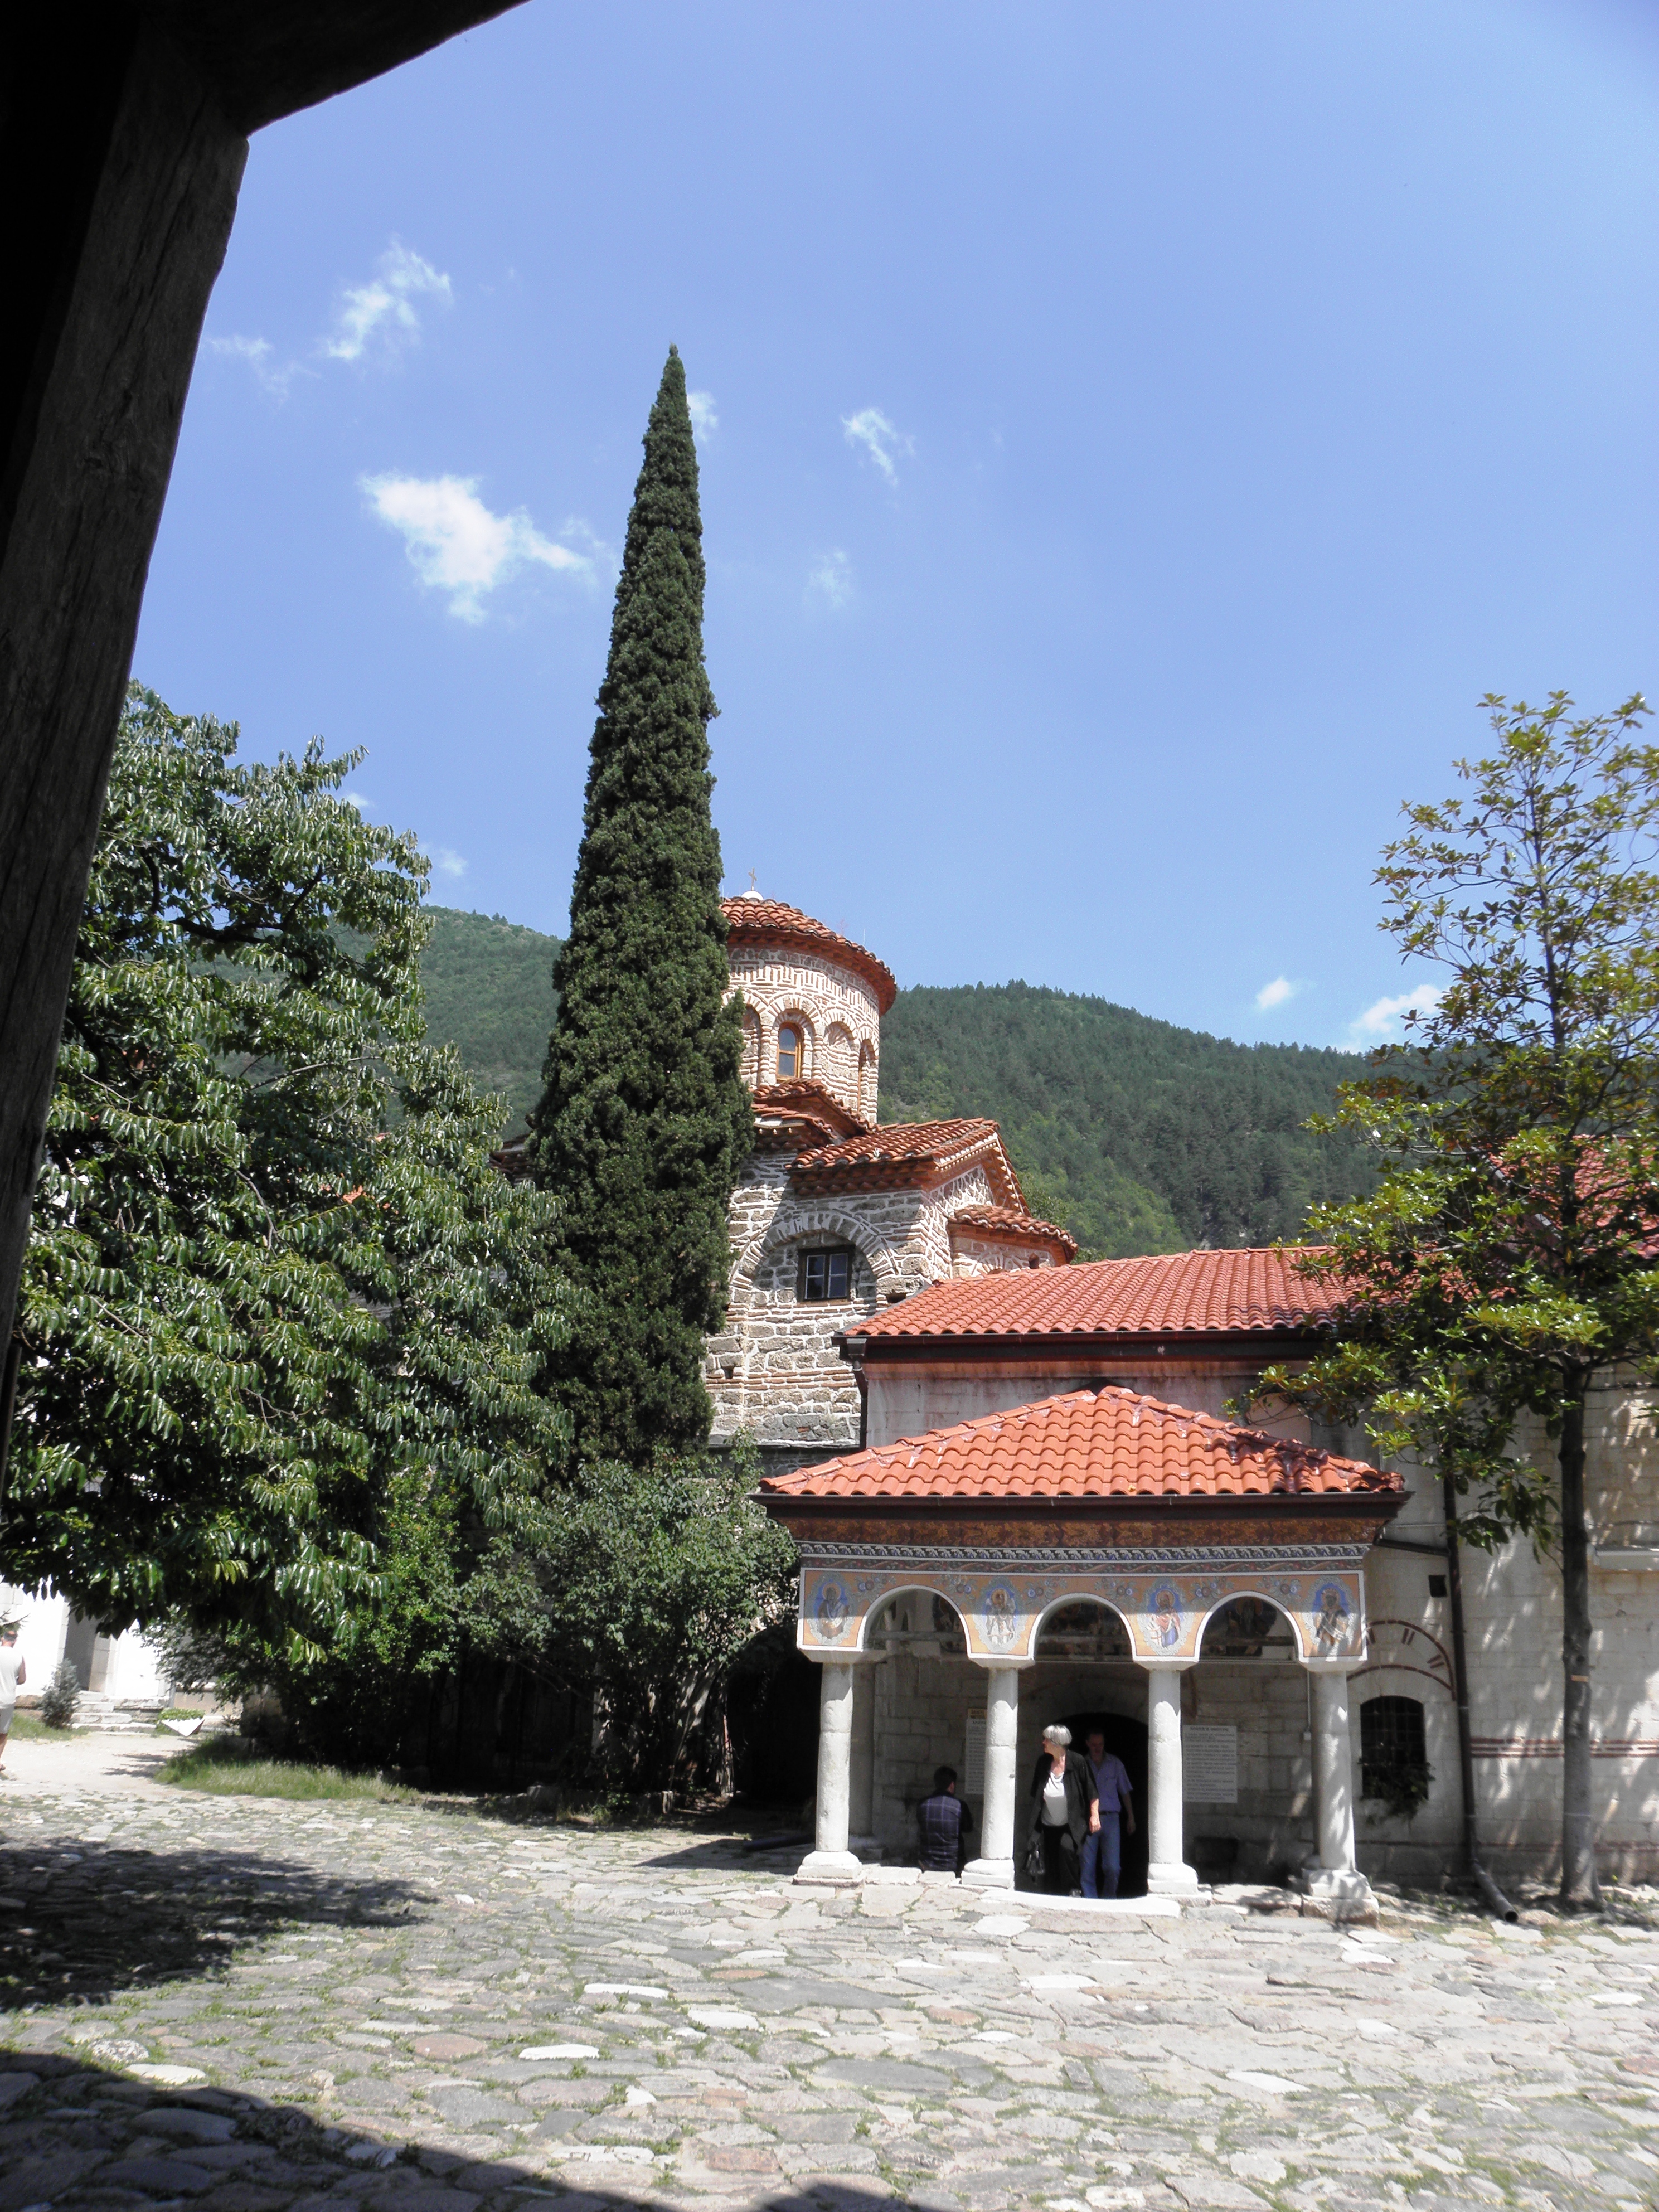 The Cherepich monastery